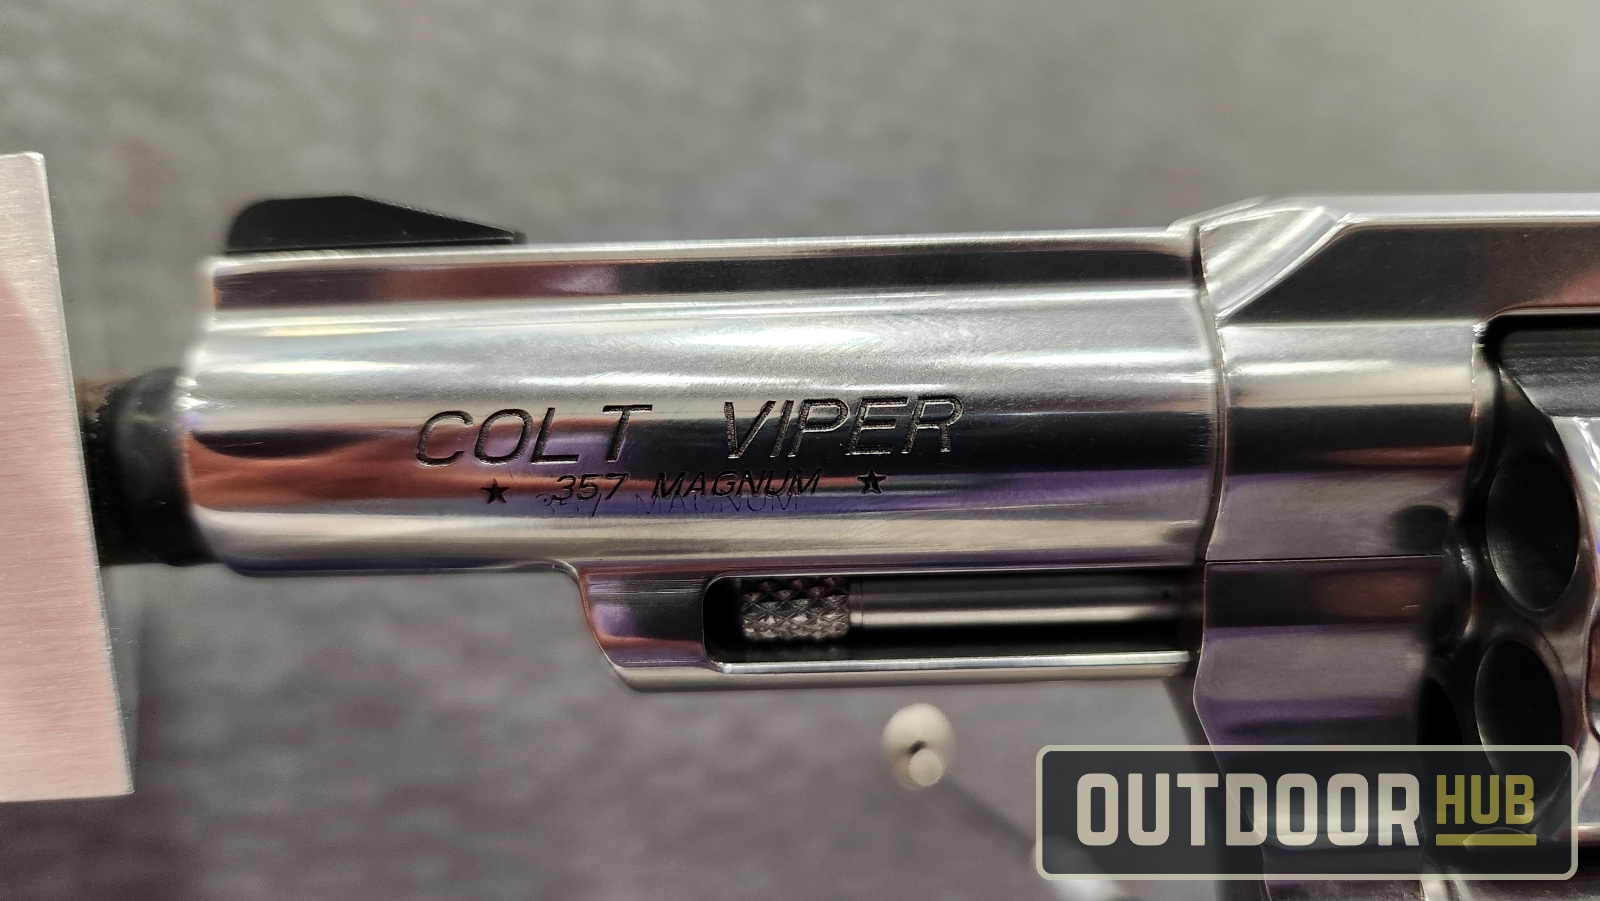 [NRAAM] Colt Revives the Colt Viper